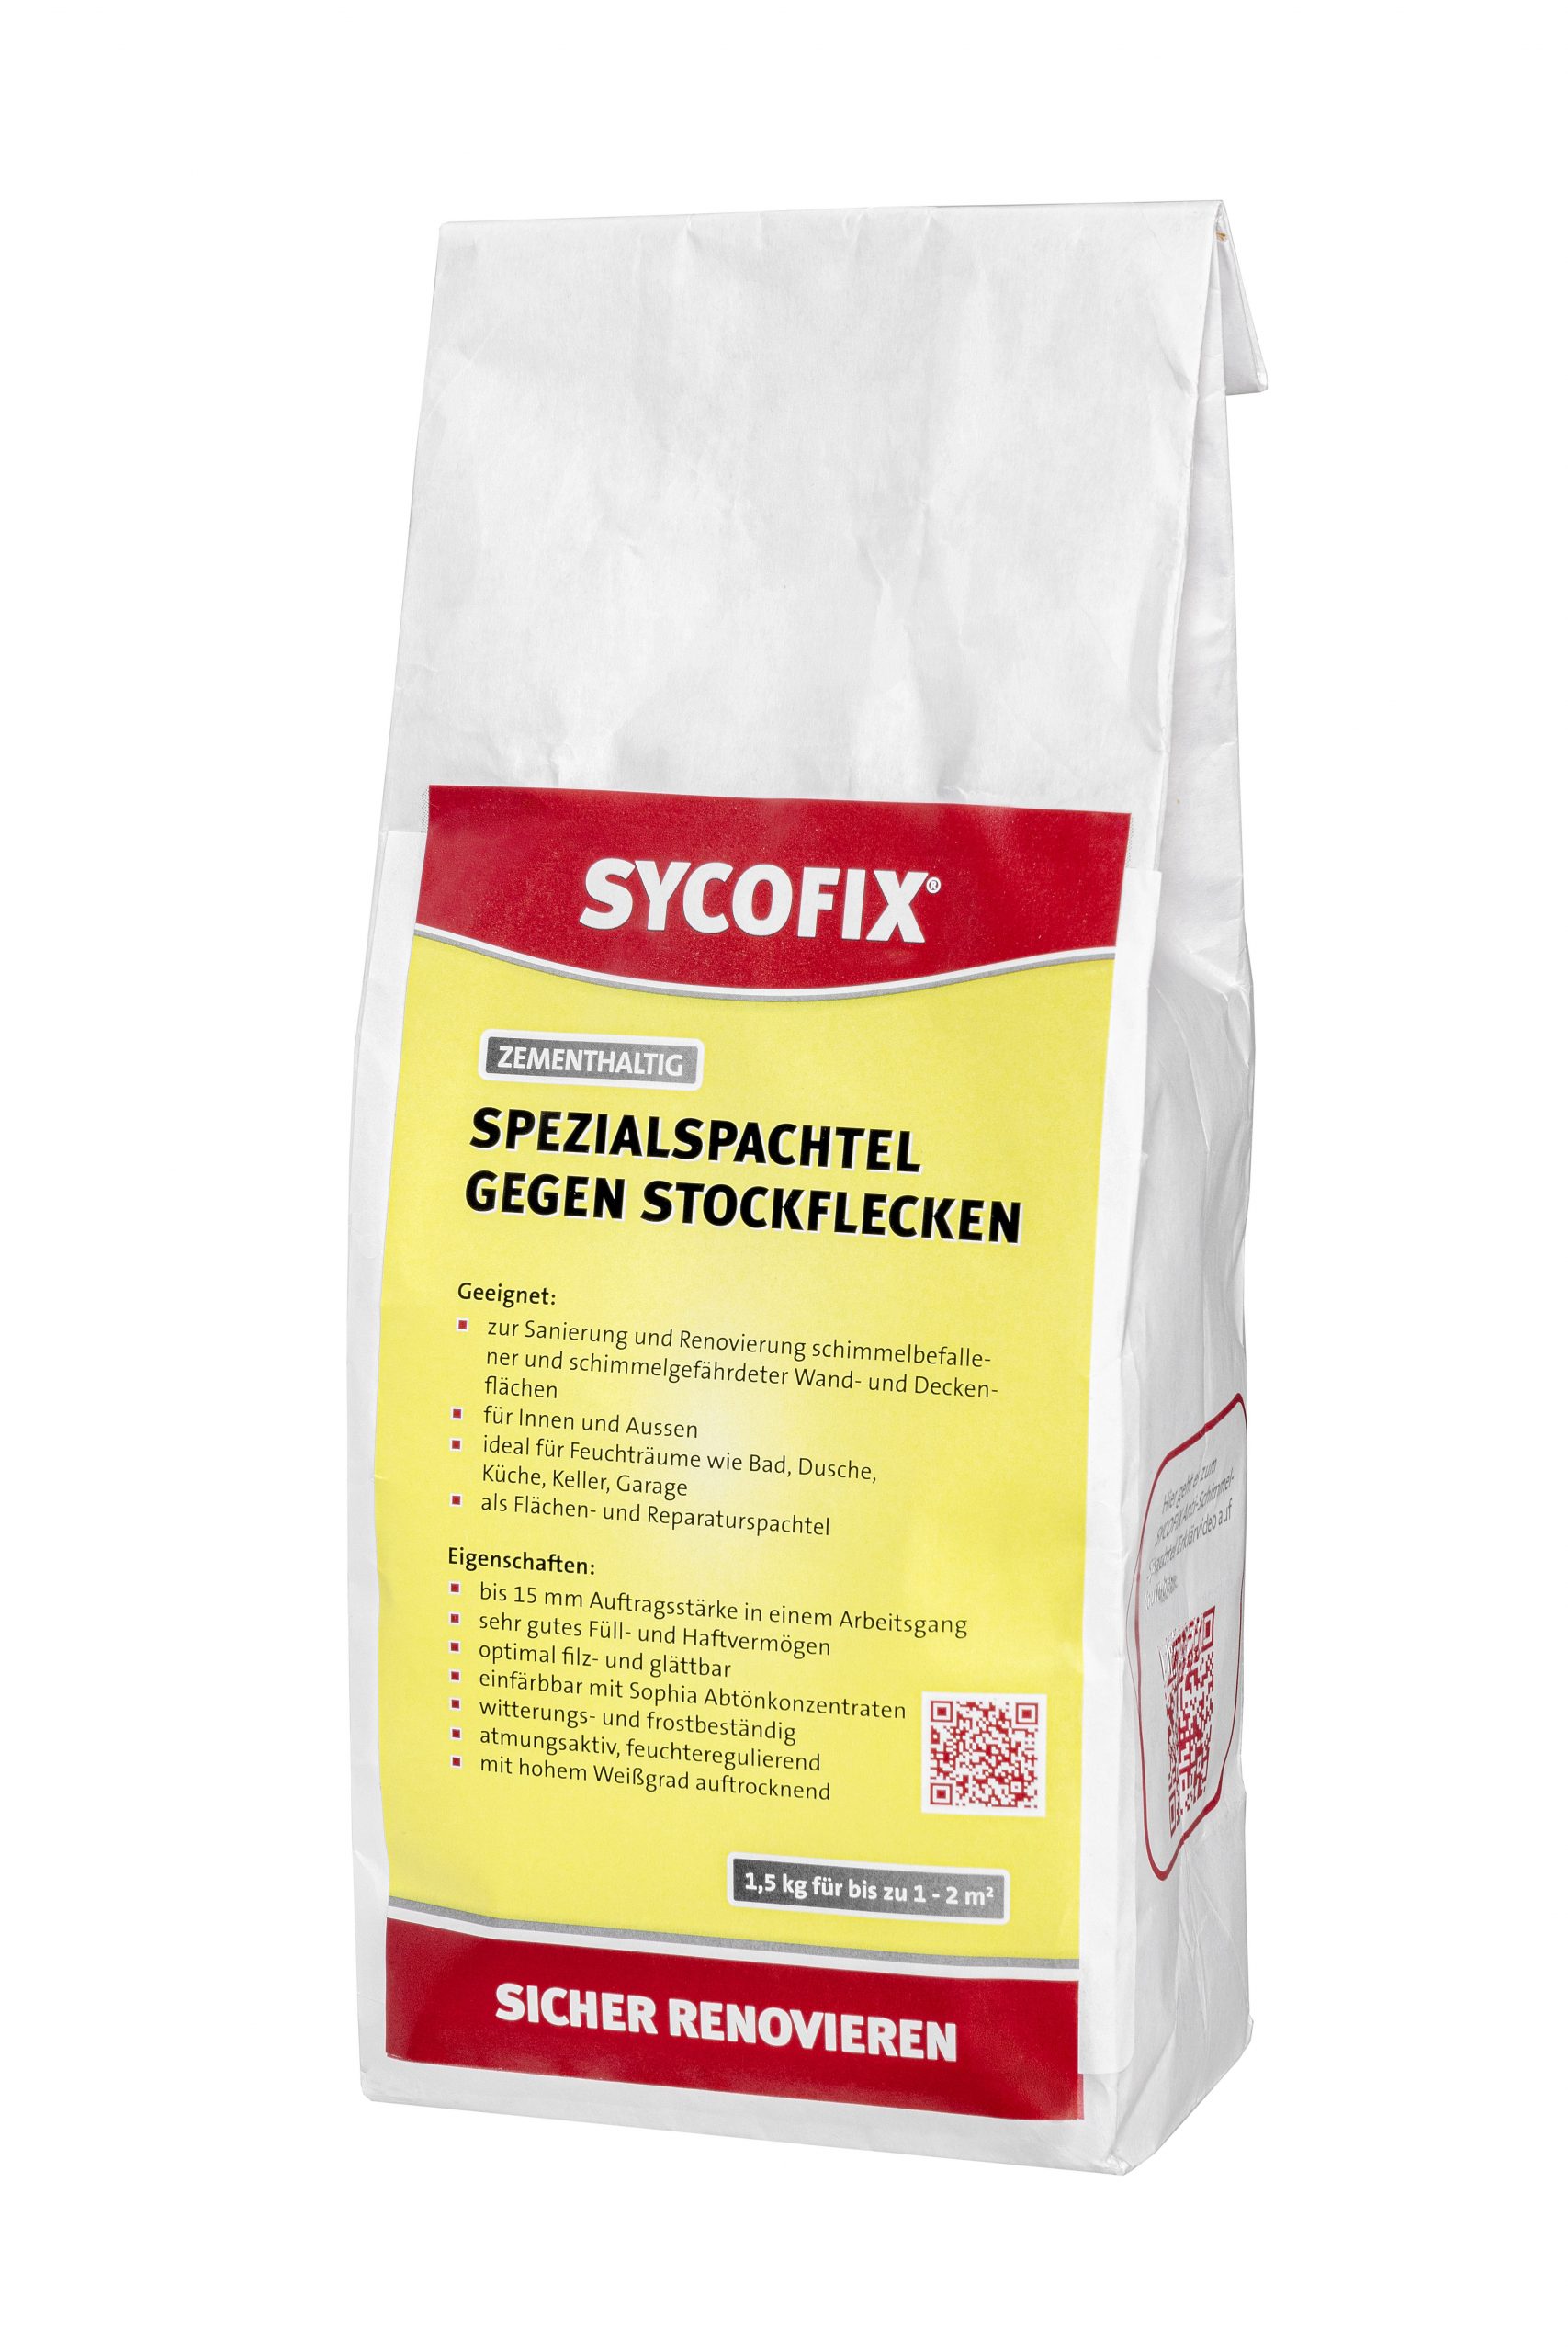 Sycofix Spezialspachtel gegen Stockflecken 1,5kg